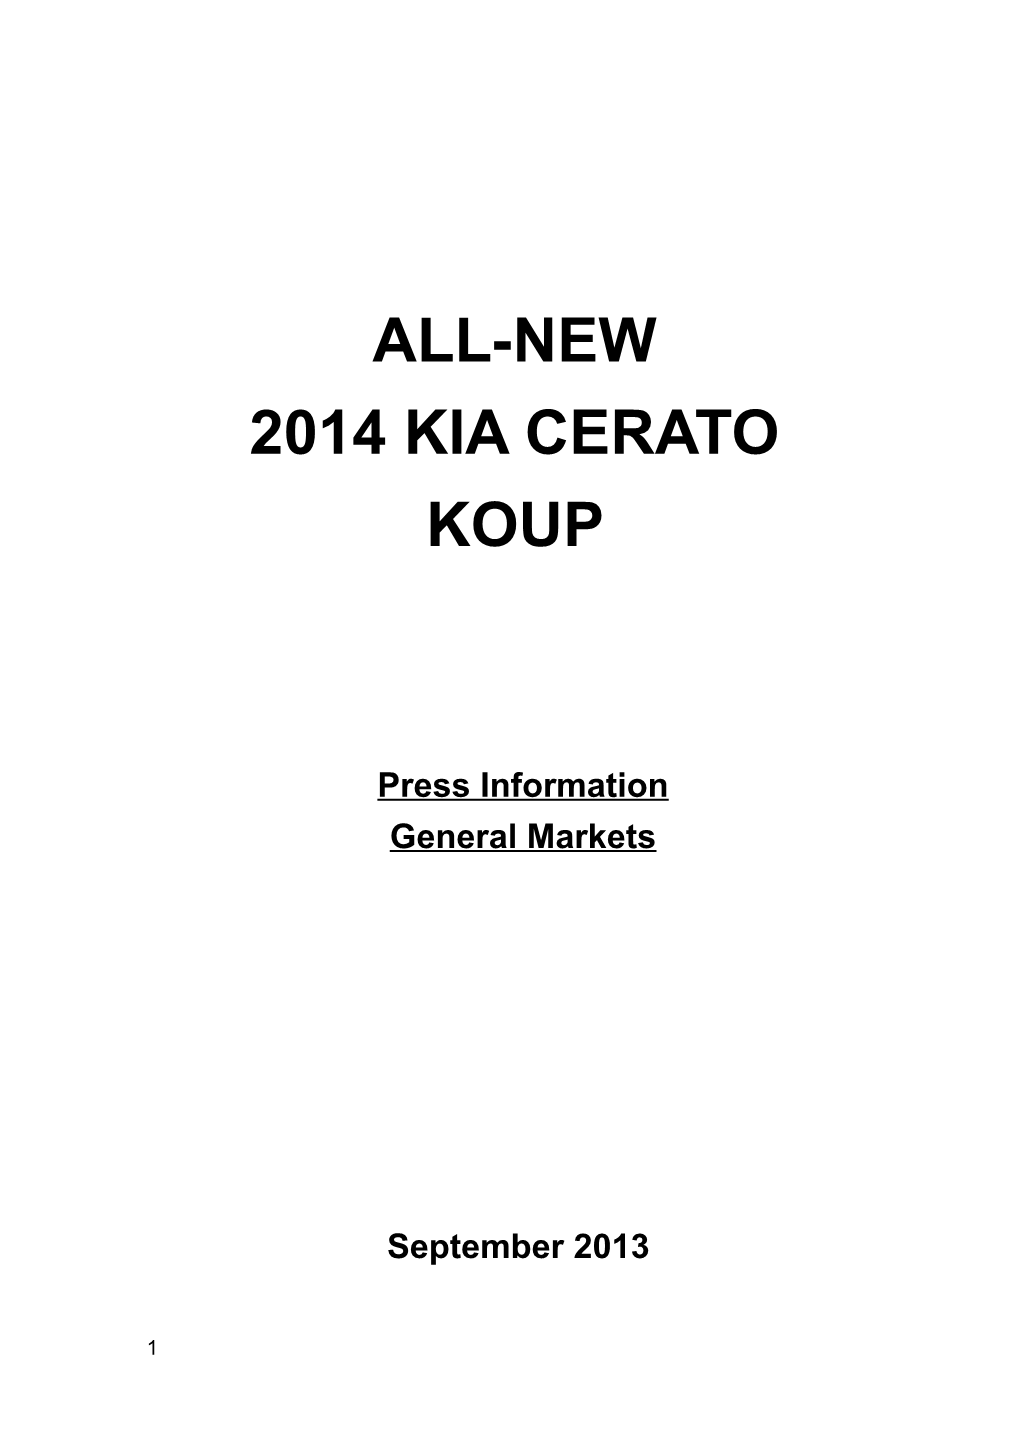 All-New 2014 Kia Cerato Koup